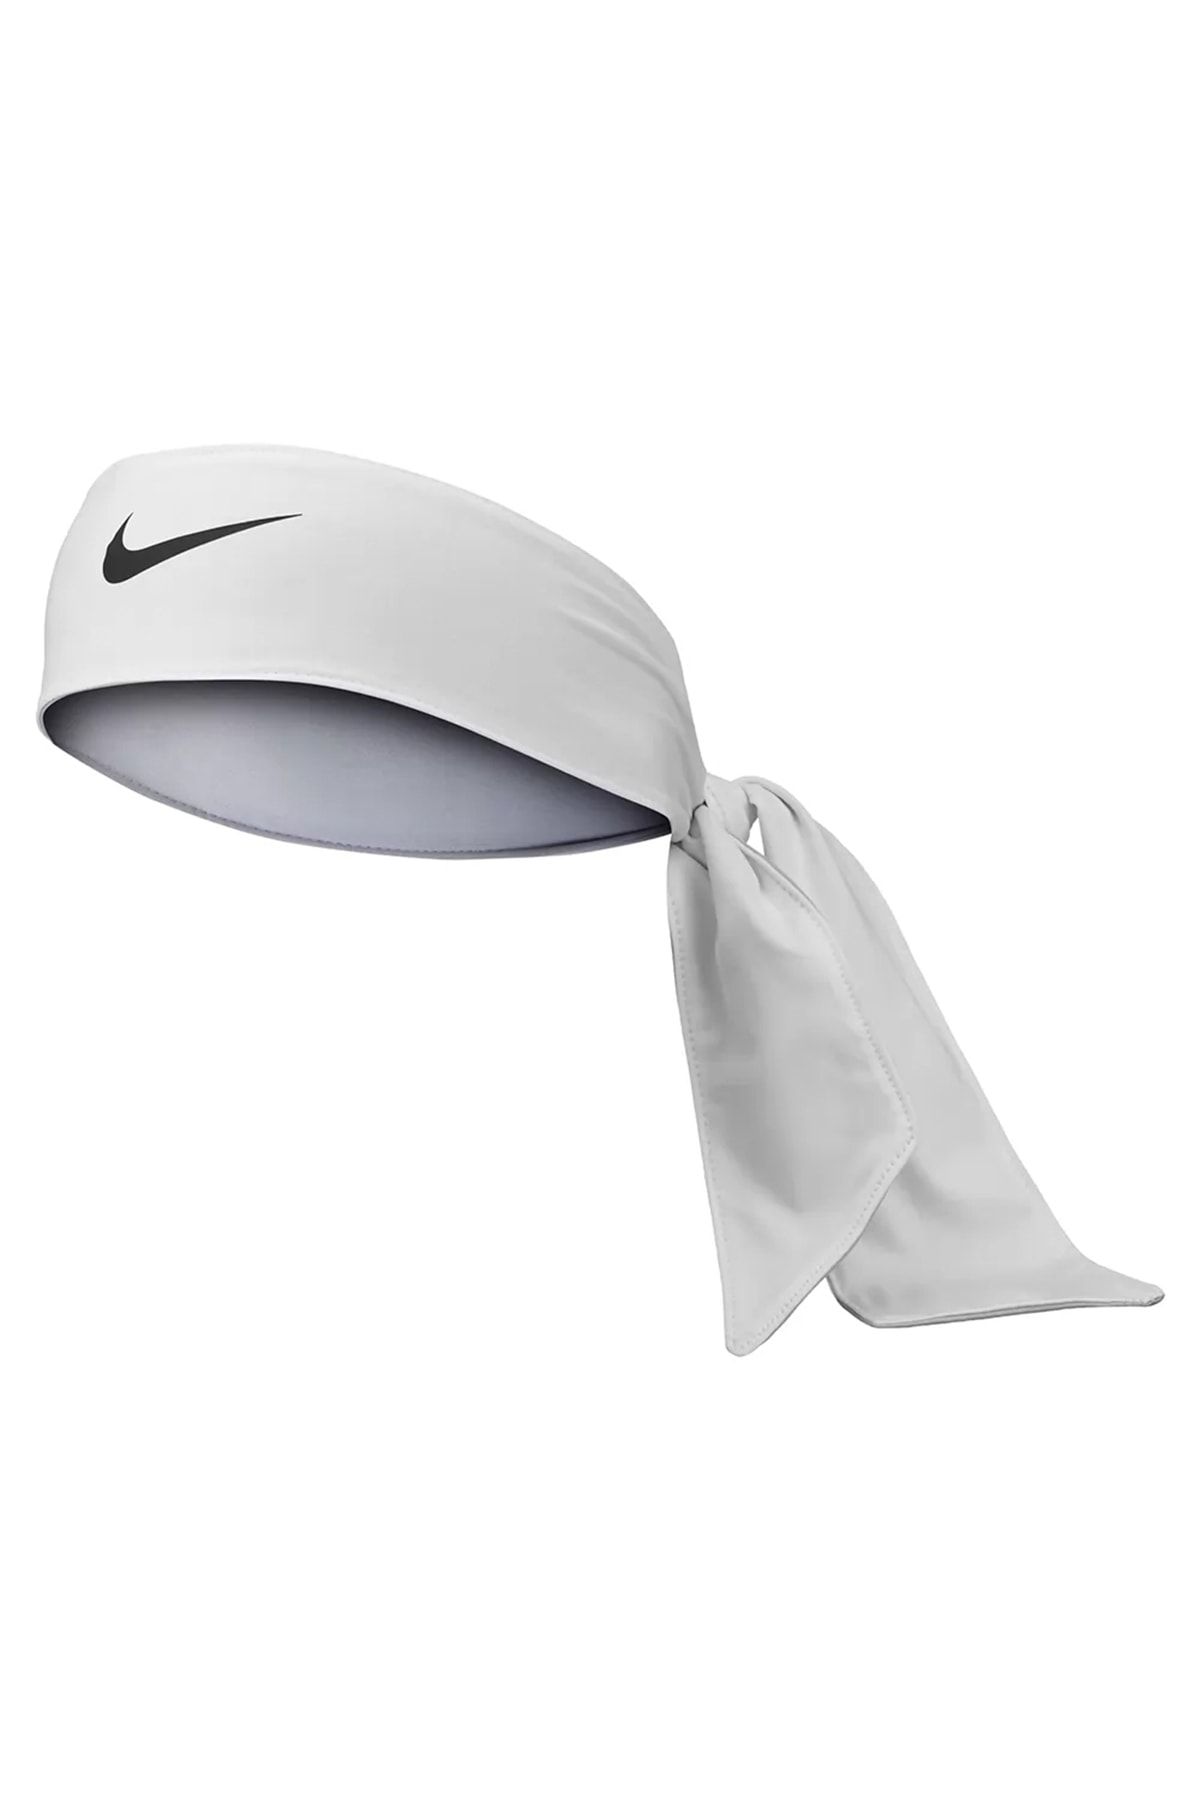 Nike Njnk9-150 Cooling Head Tie Saç Bandı